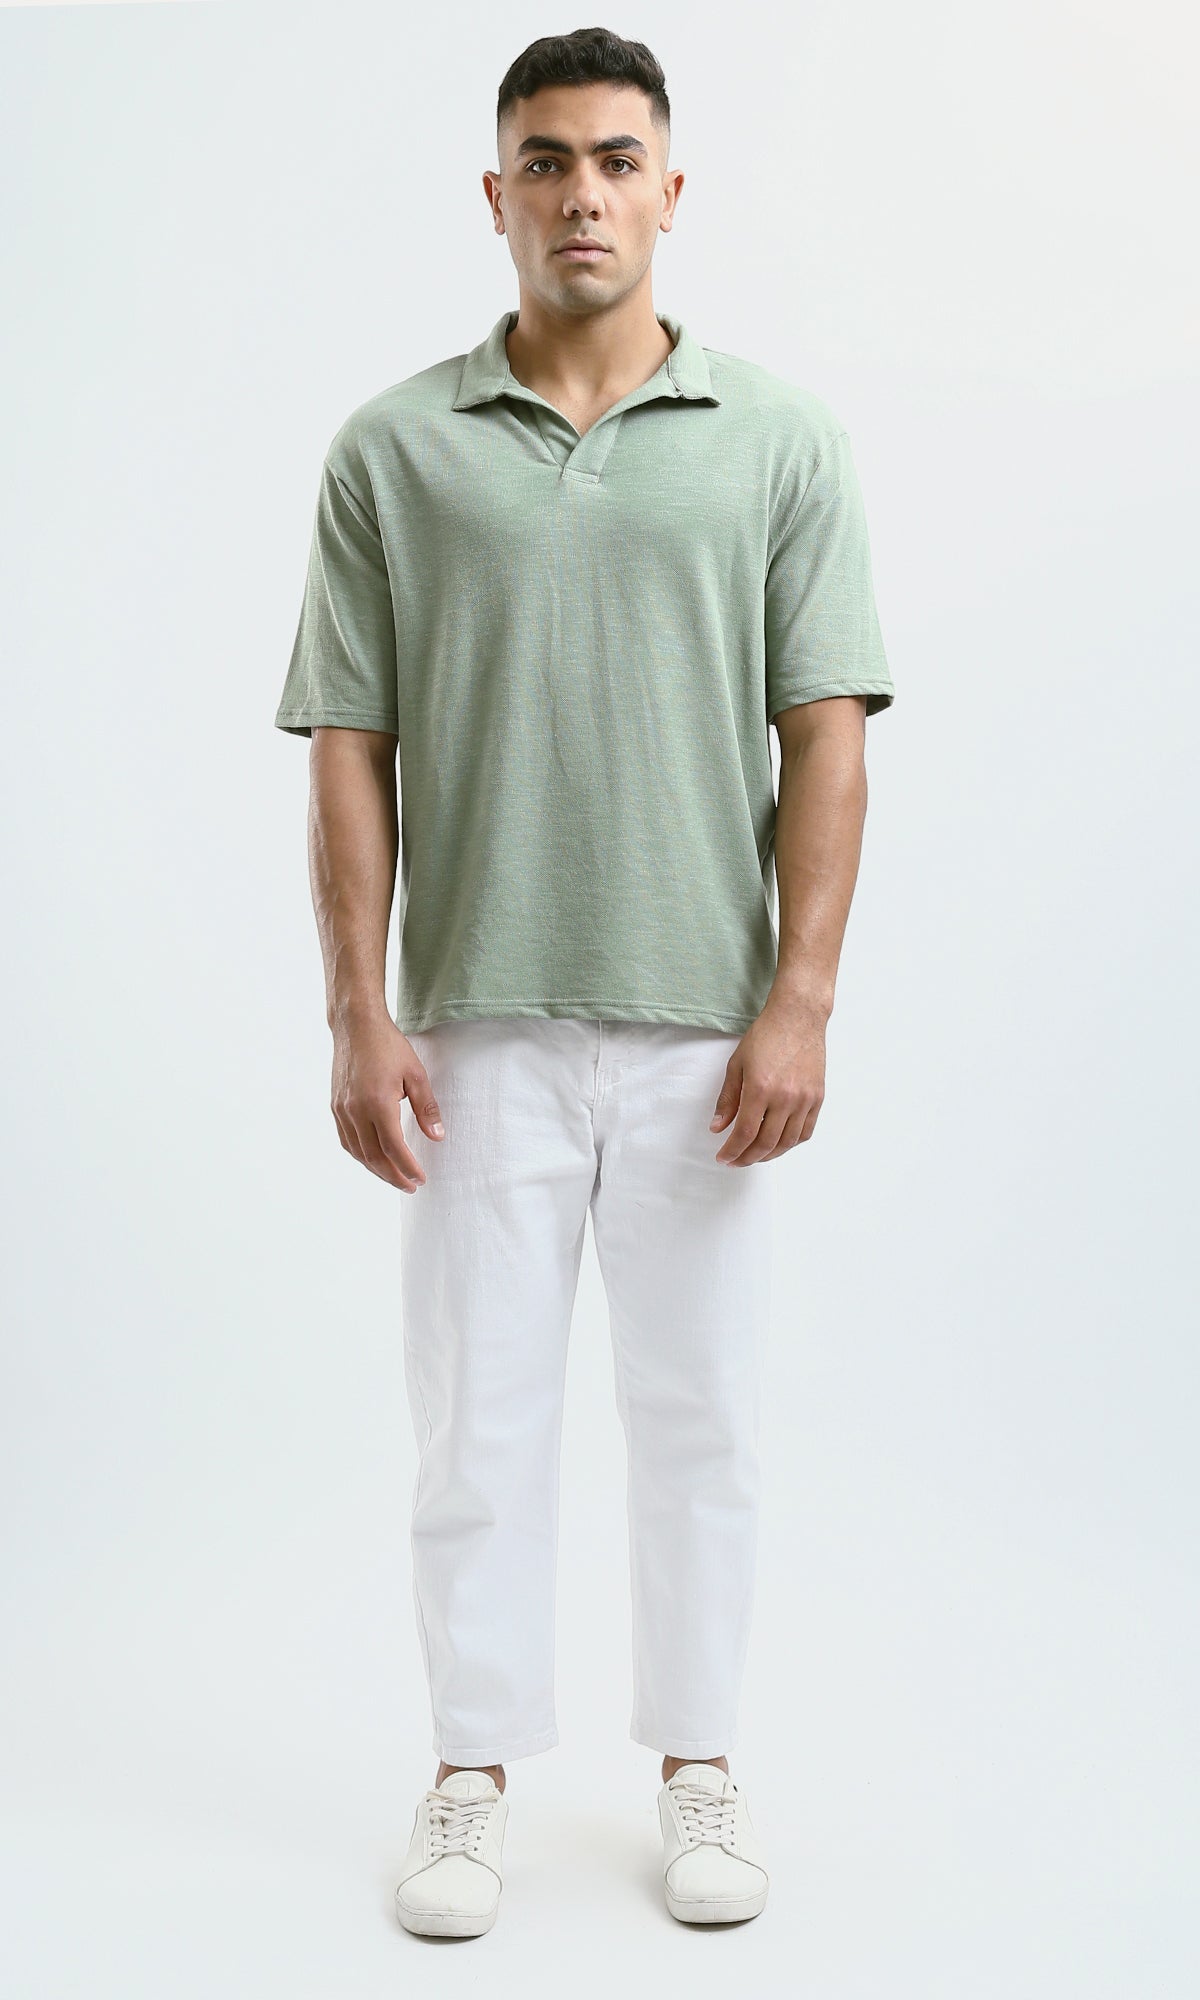 O179242 Buttoned Neck Cotton Heather Light Green Polo Shirt